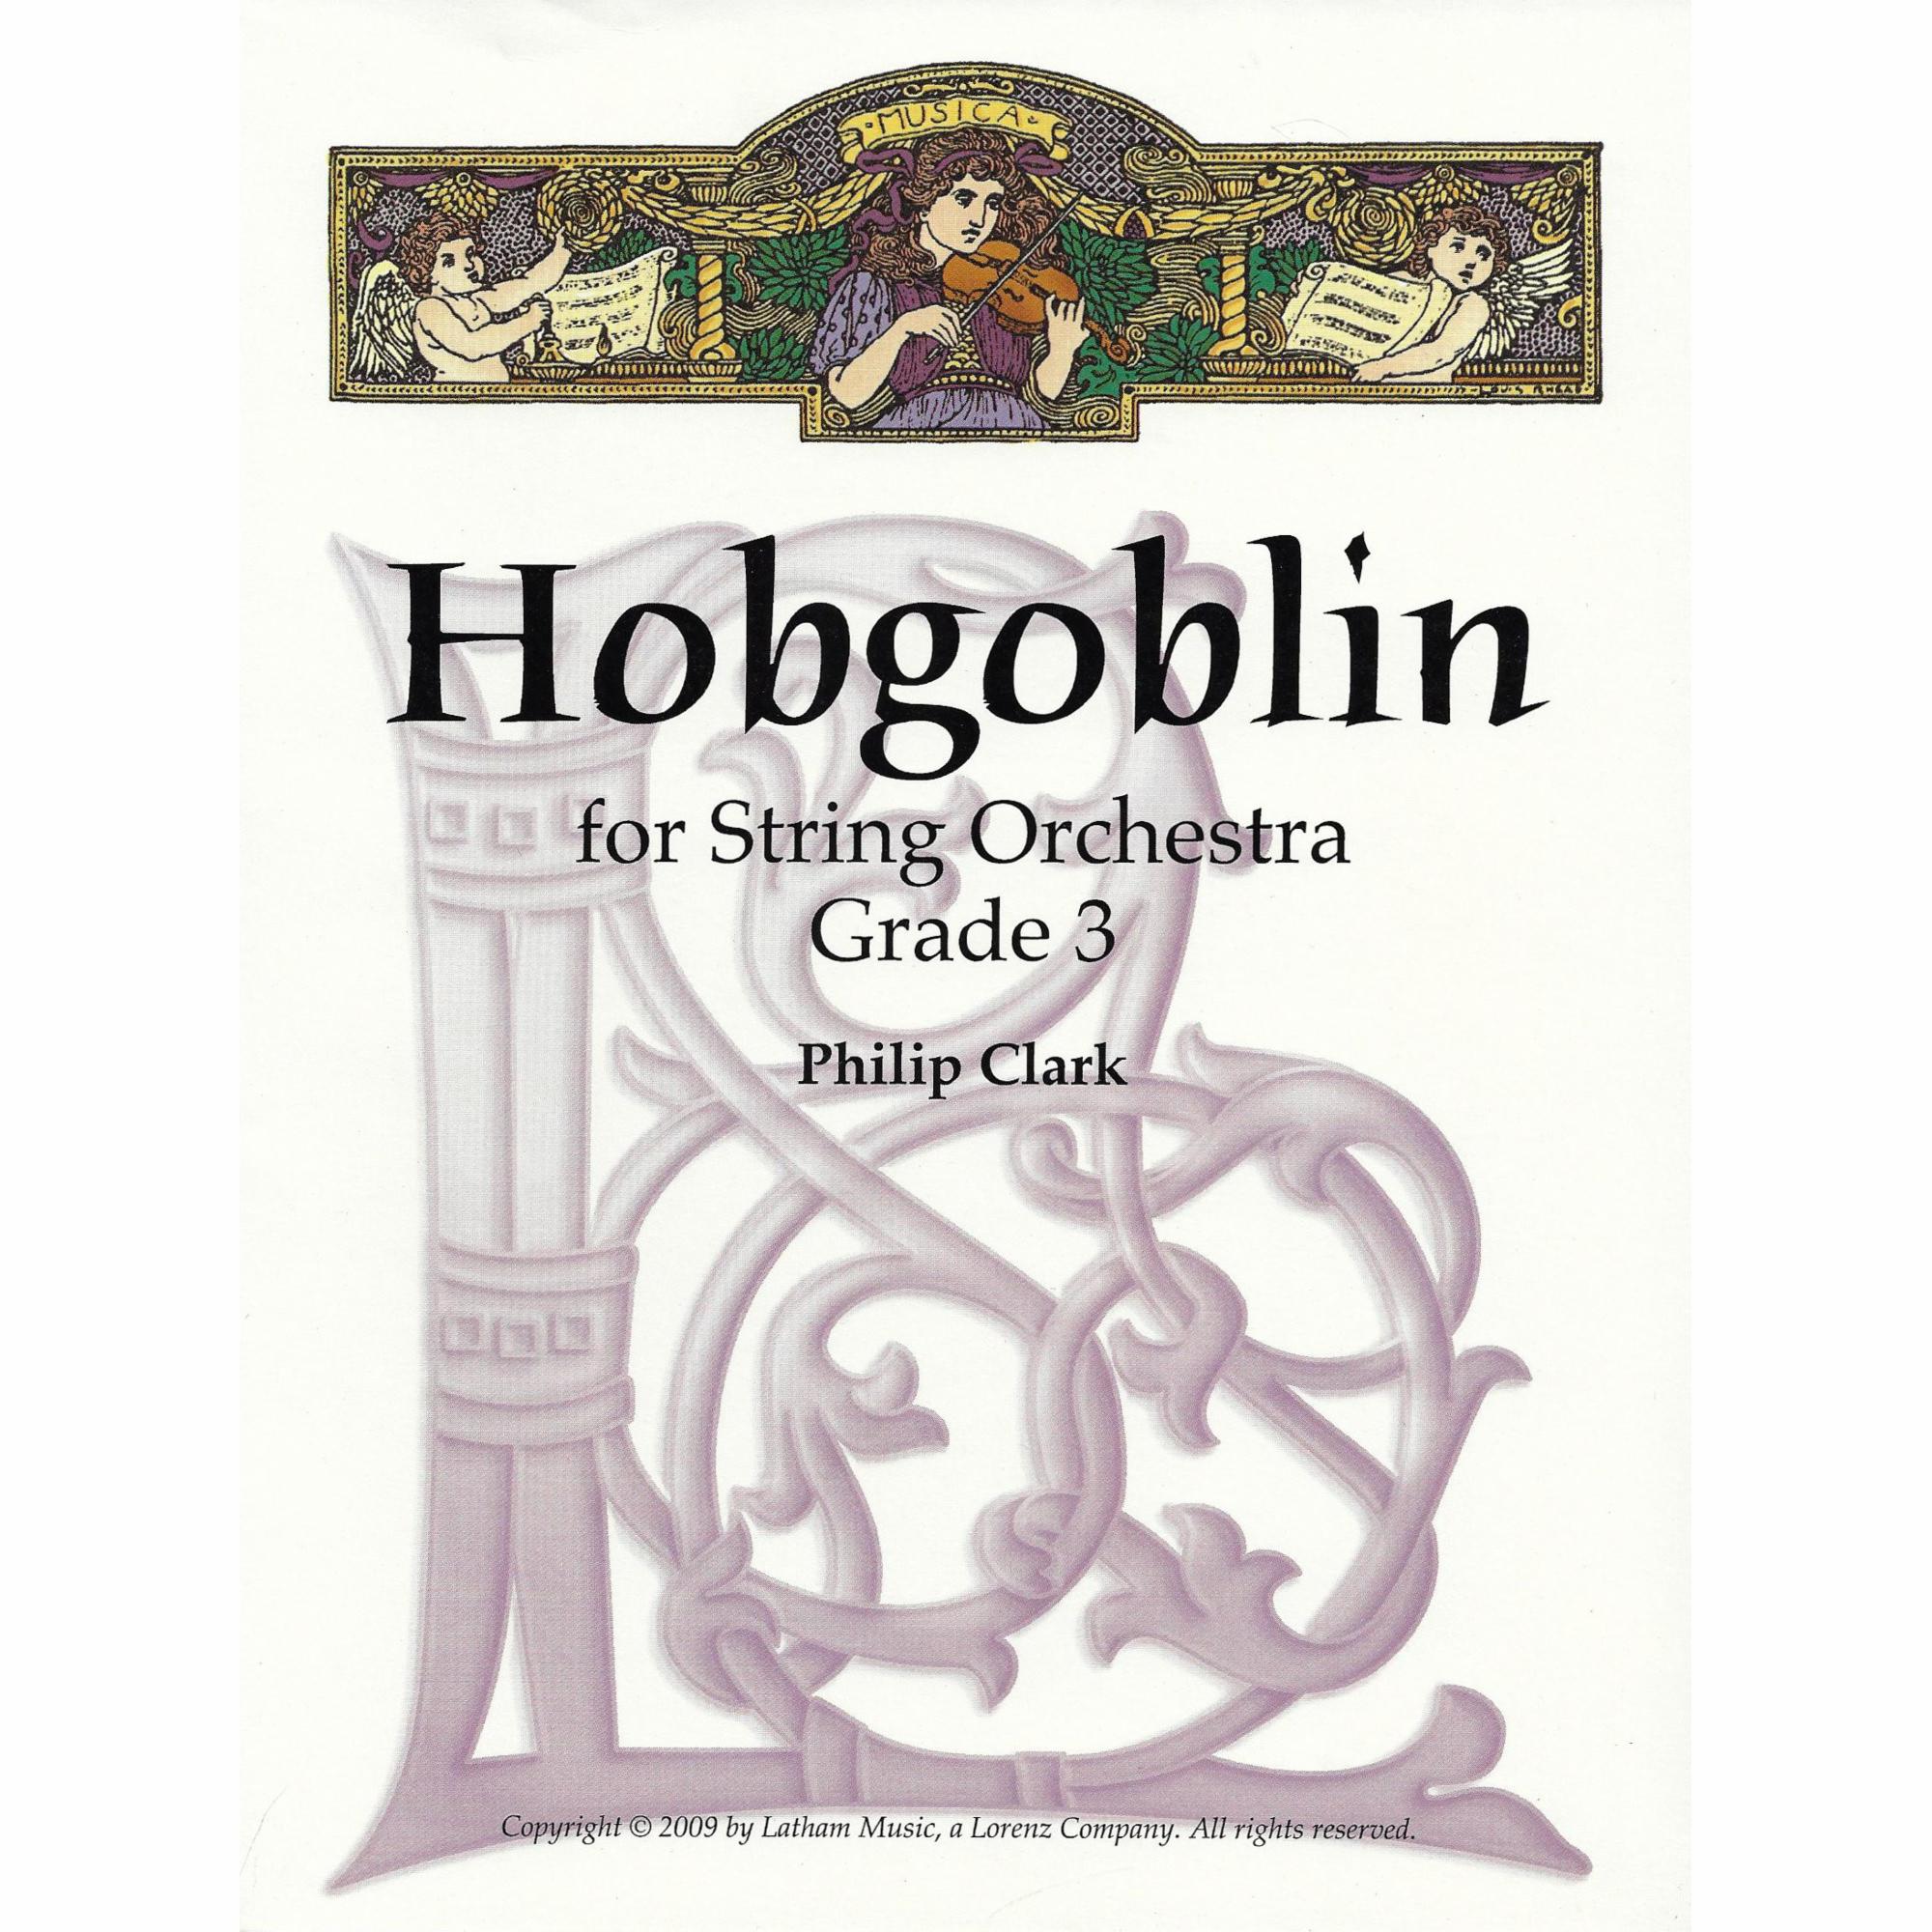 Hobgoblin for String Orchestra